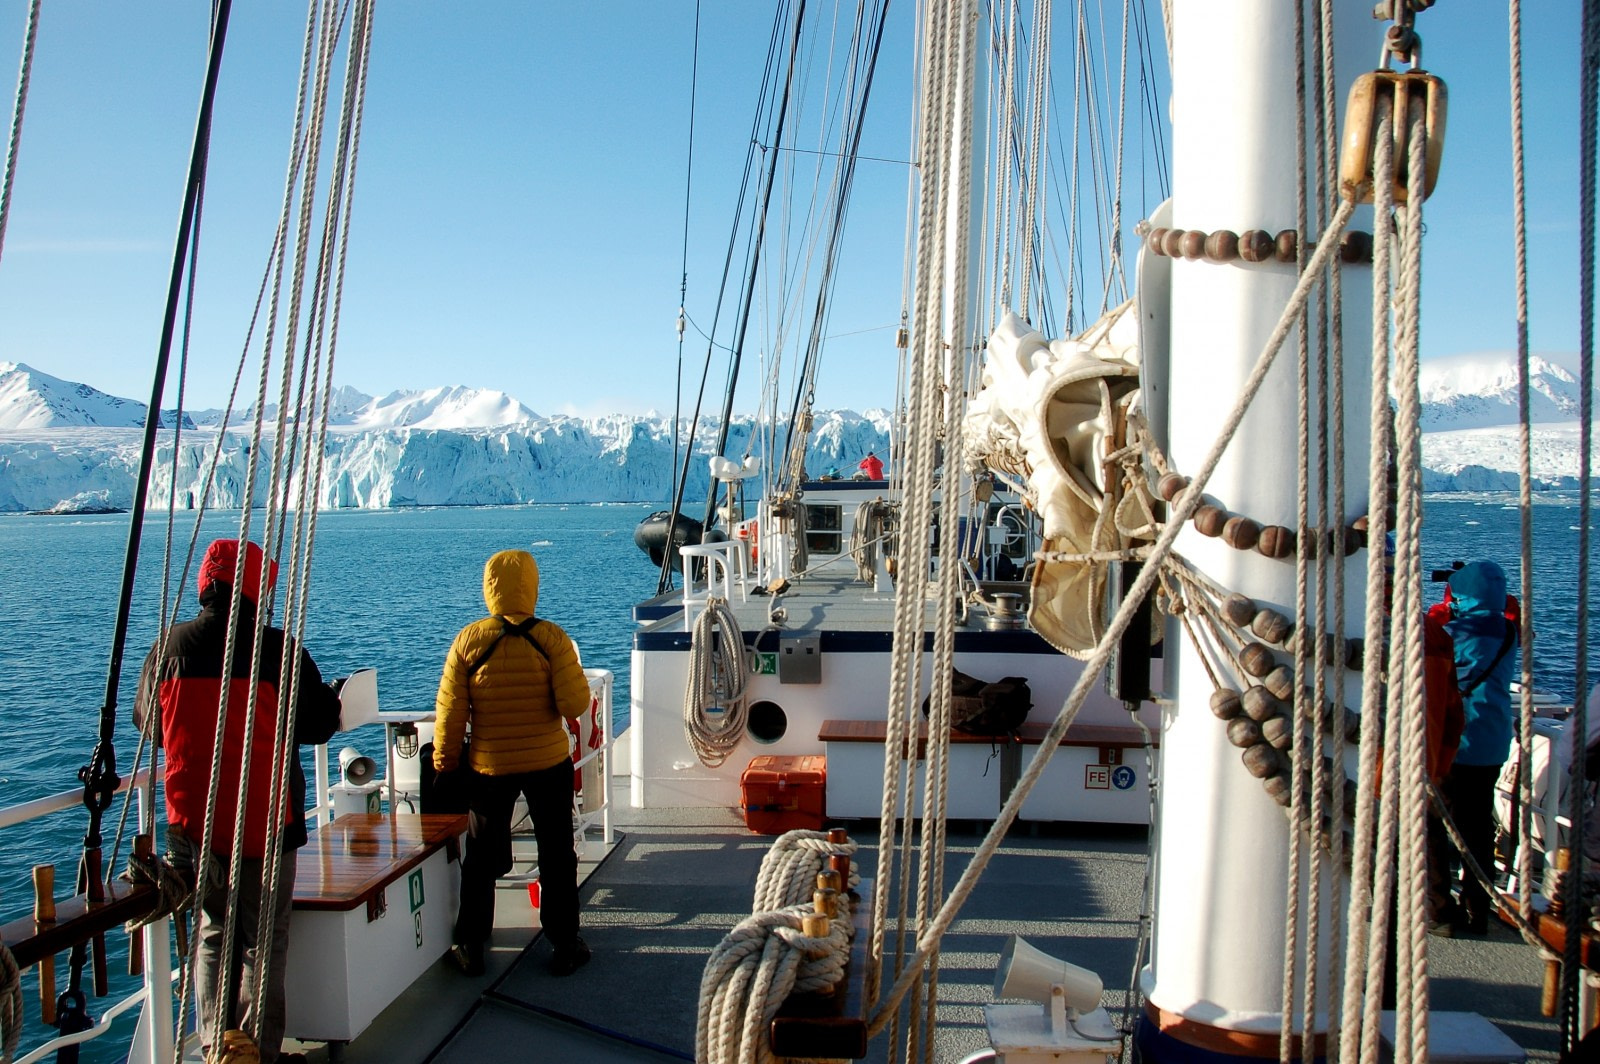 North Spitsbergen - Arctic Spring - Hike & Ski & Sail, RVR04-24